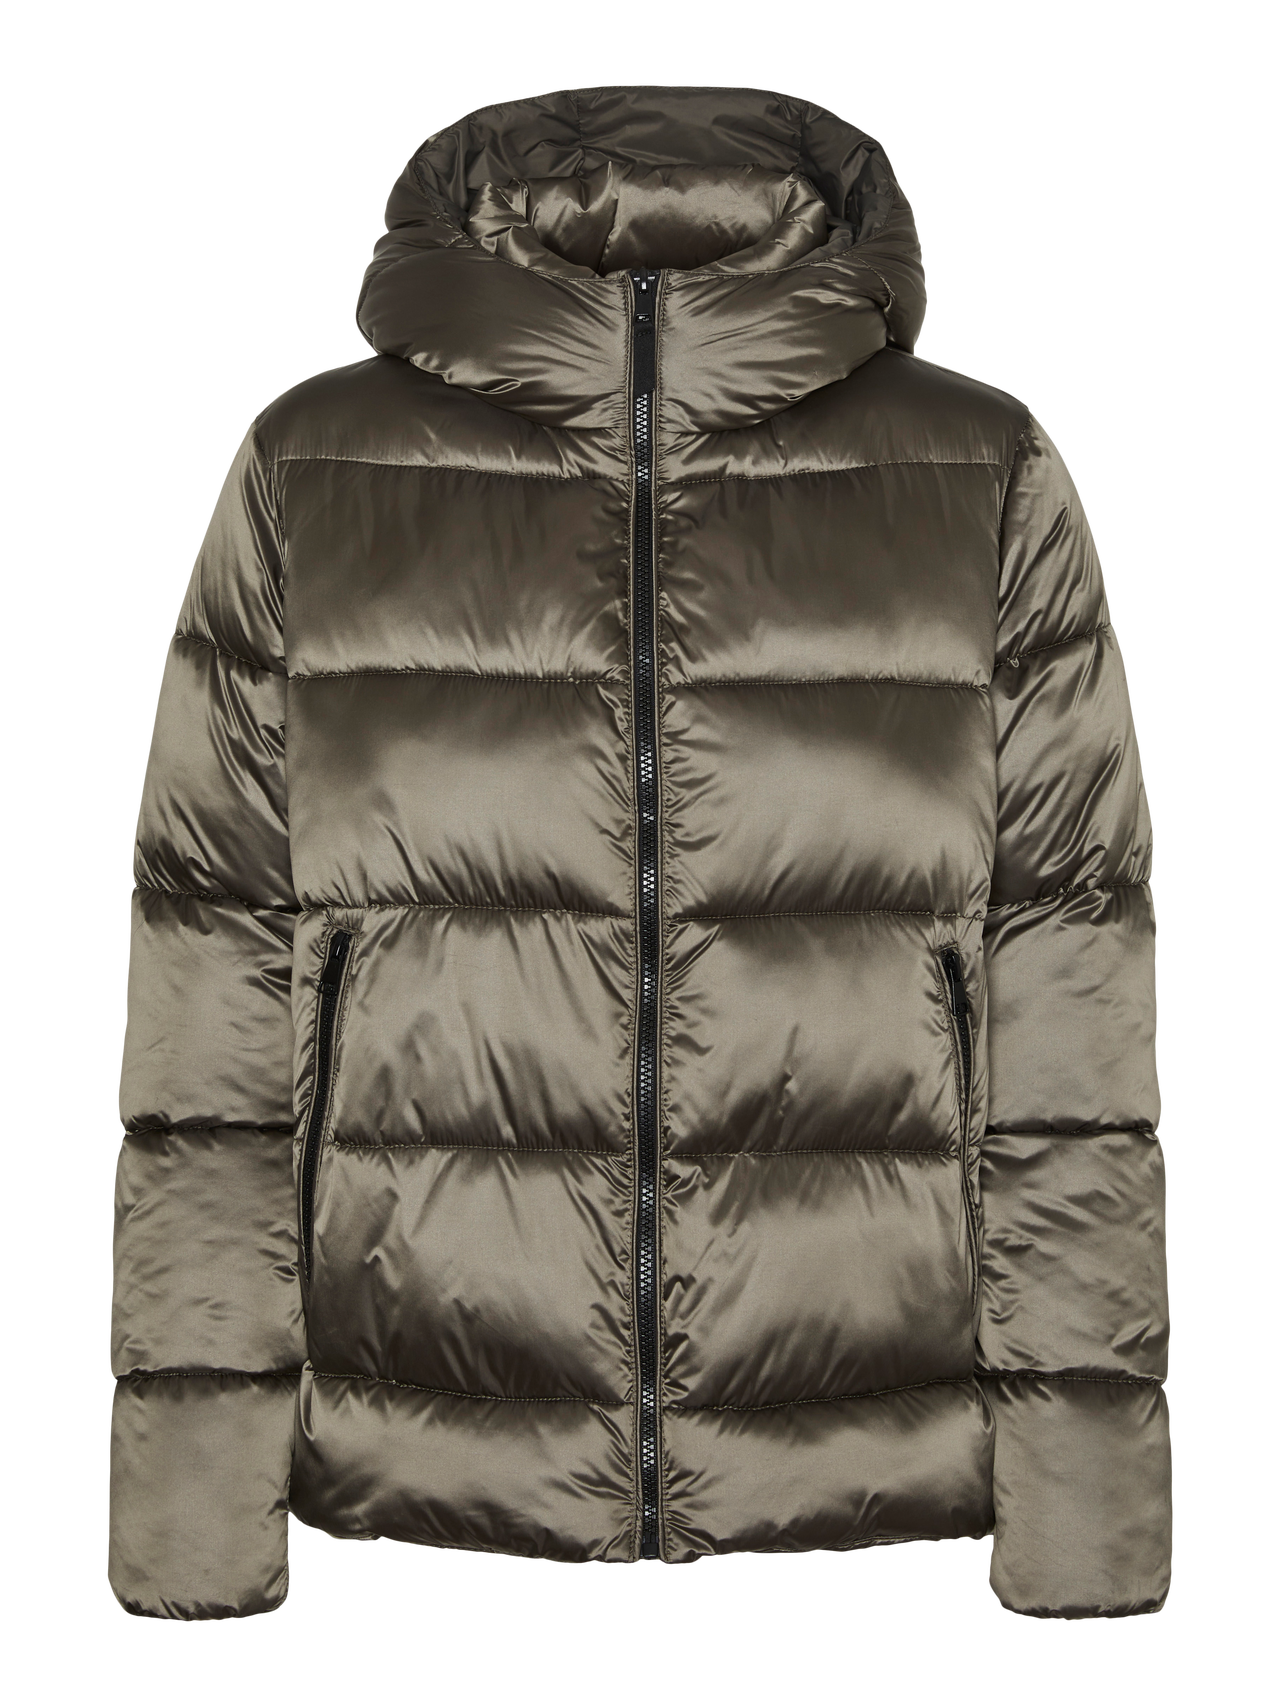 Vero Moda VMNALINA Jacket -Peat - 10309813